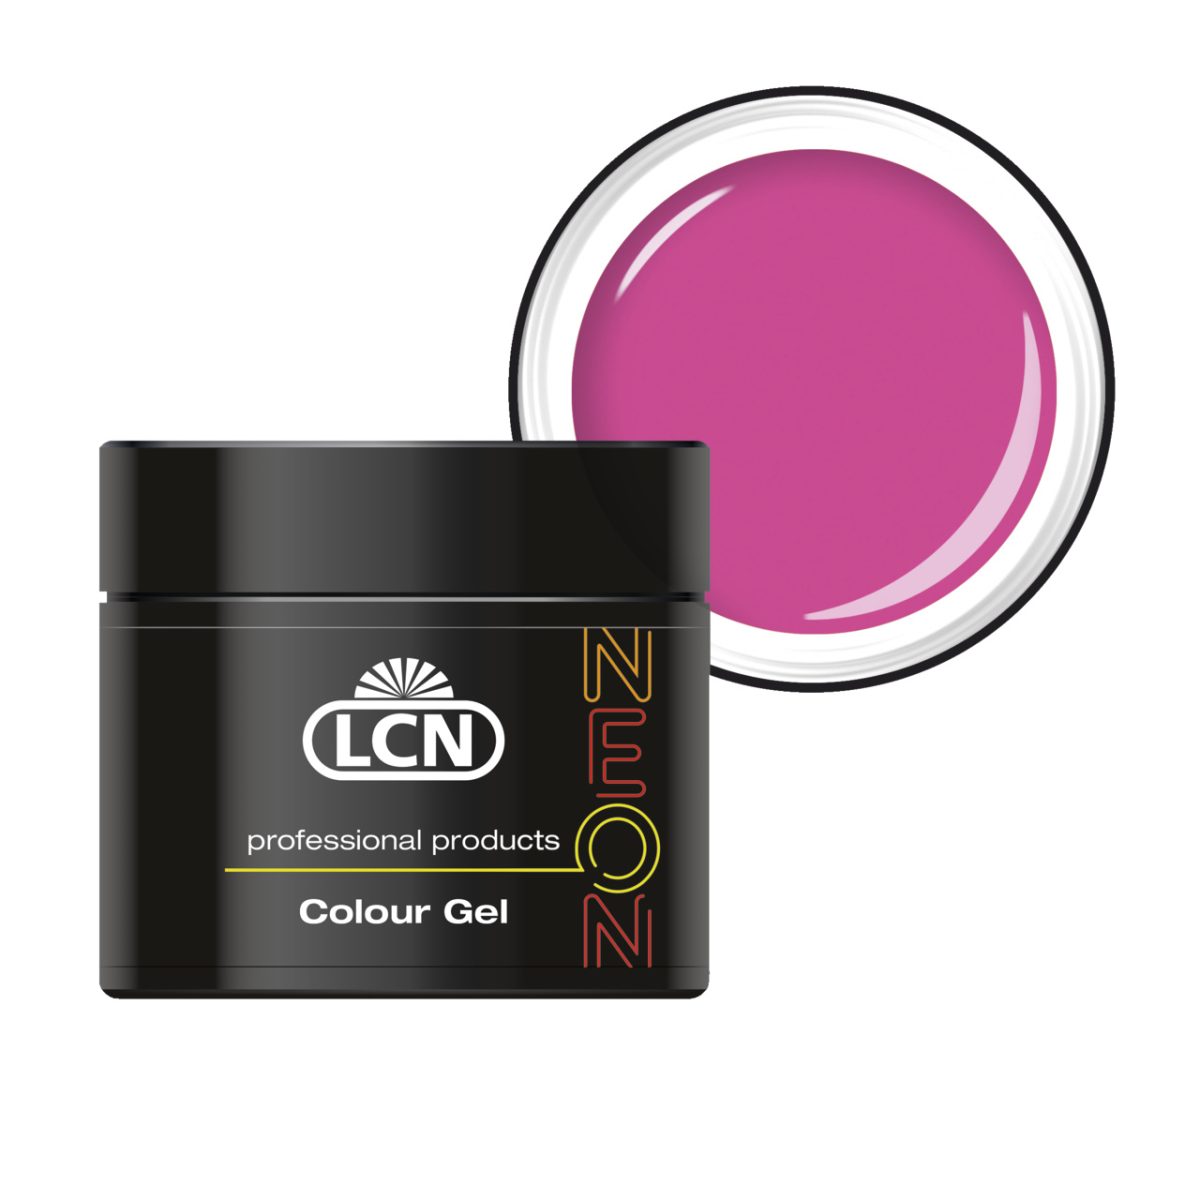 Colour gel neon dragonfruit gel u boji 5ml20605 802